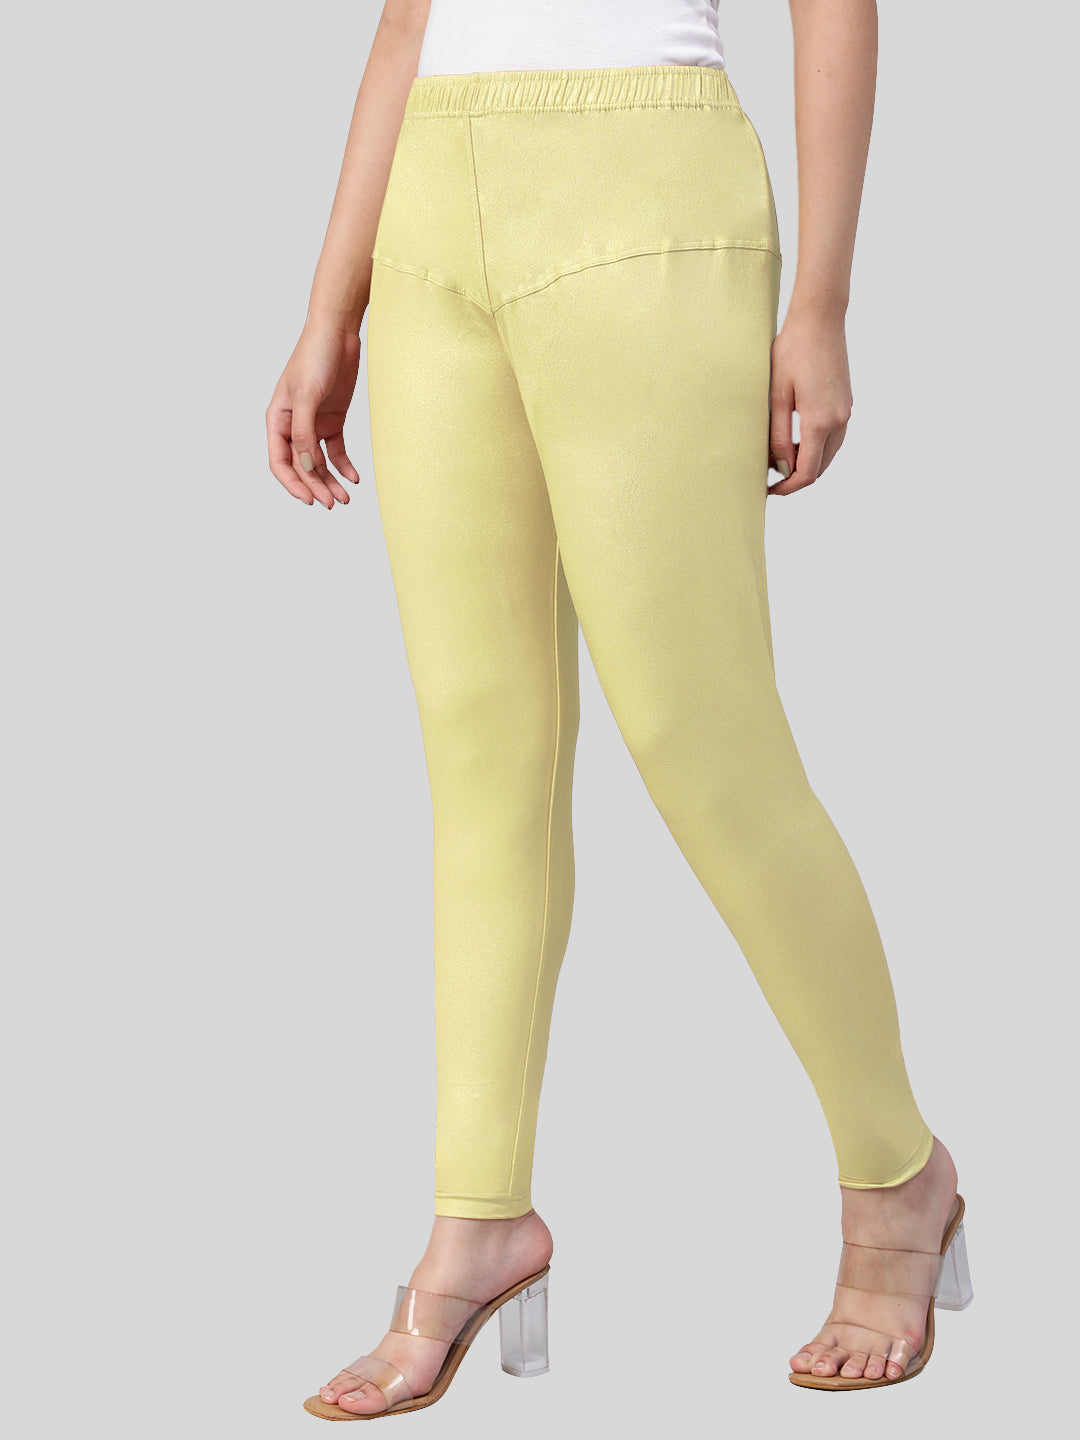 Buy Lemon Yellow Leggings for Women by De Moza Online | Ajio.com